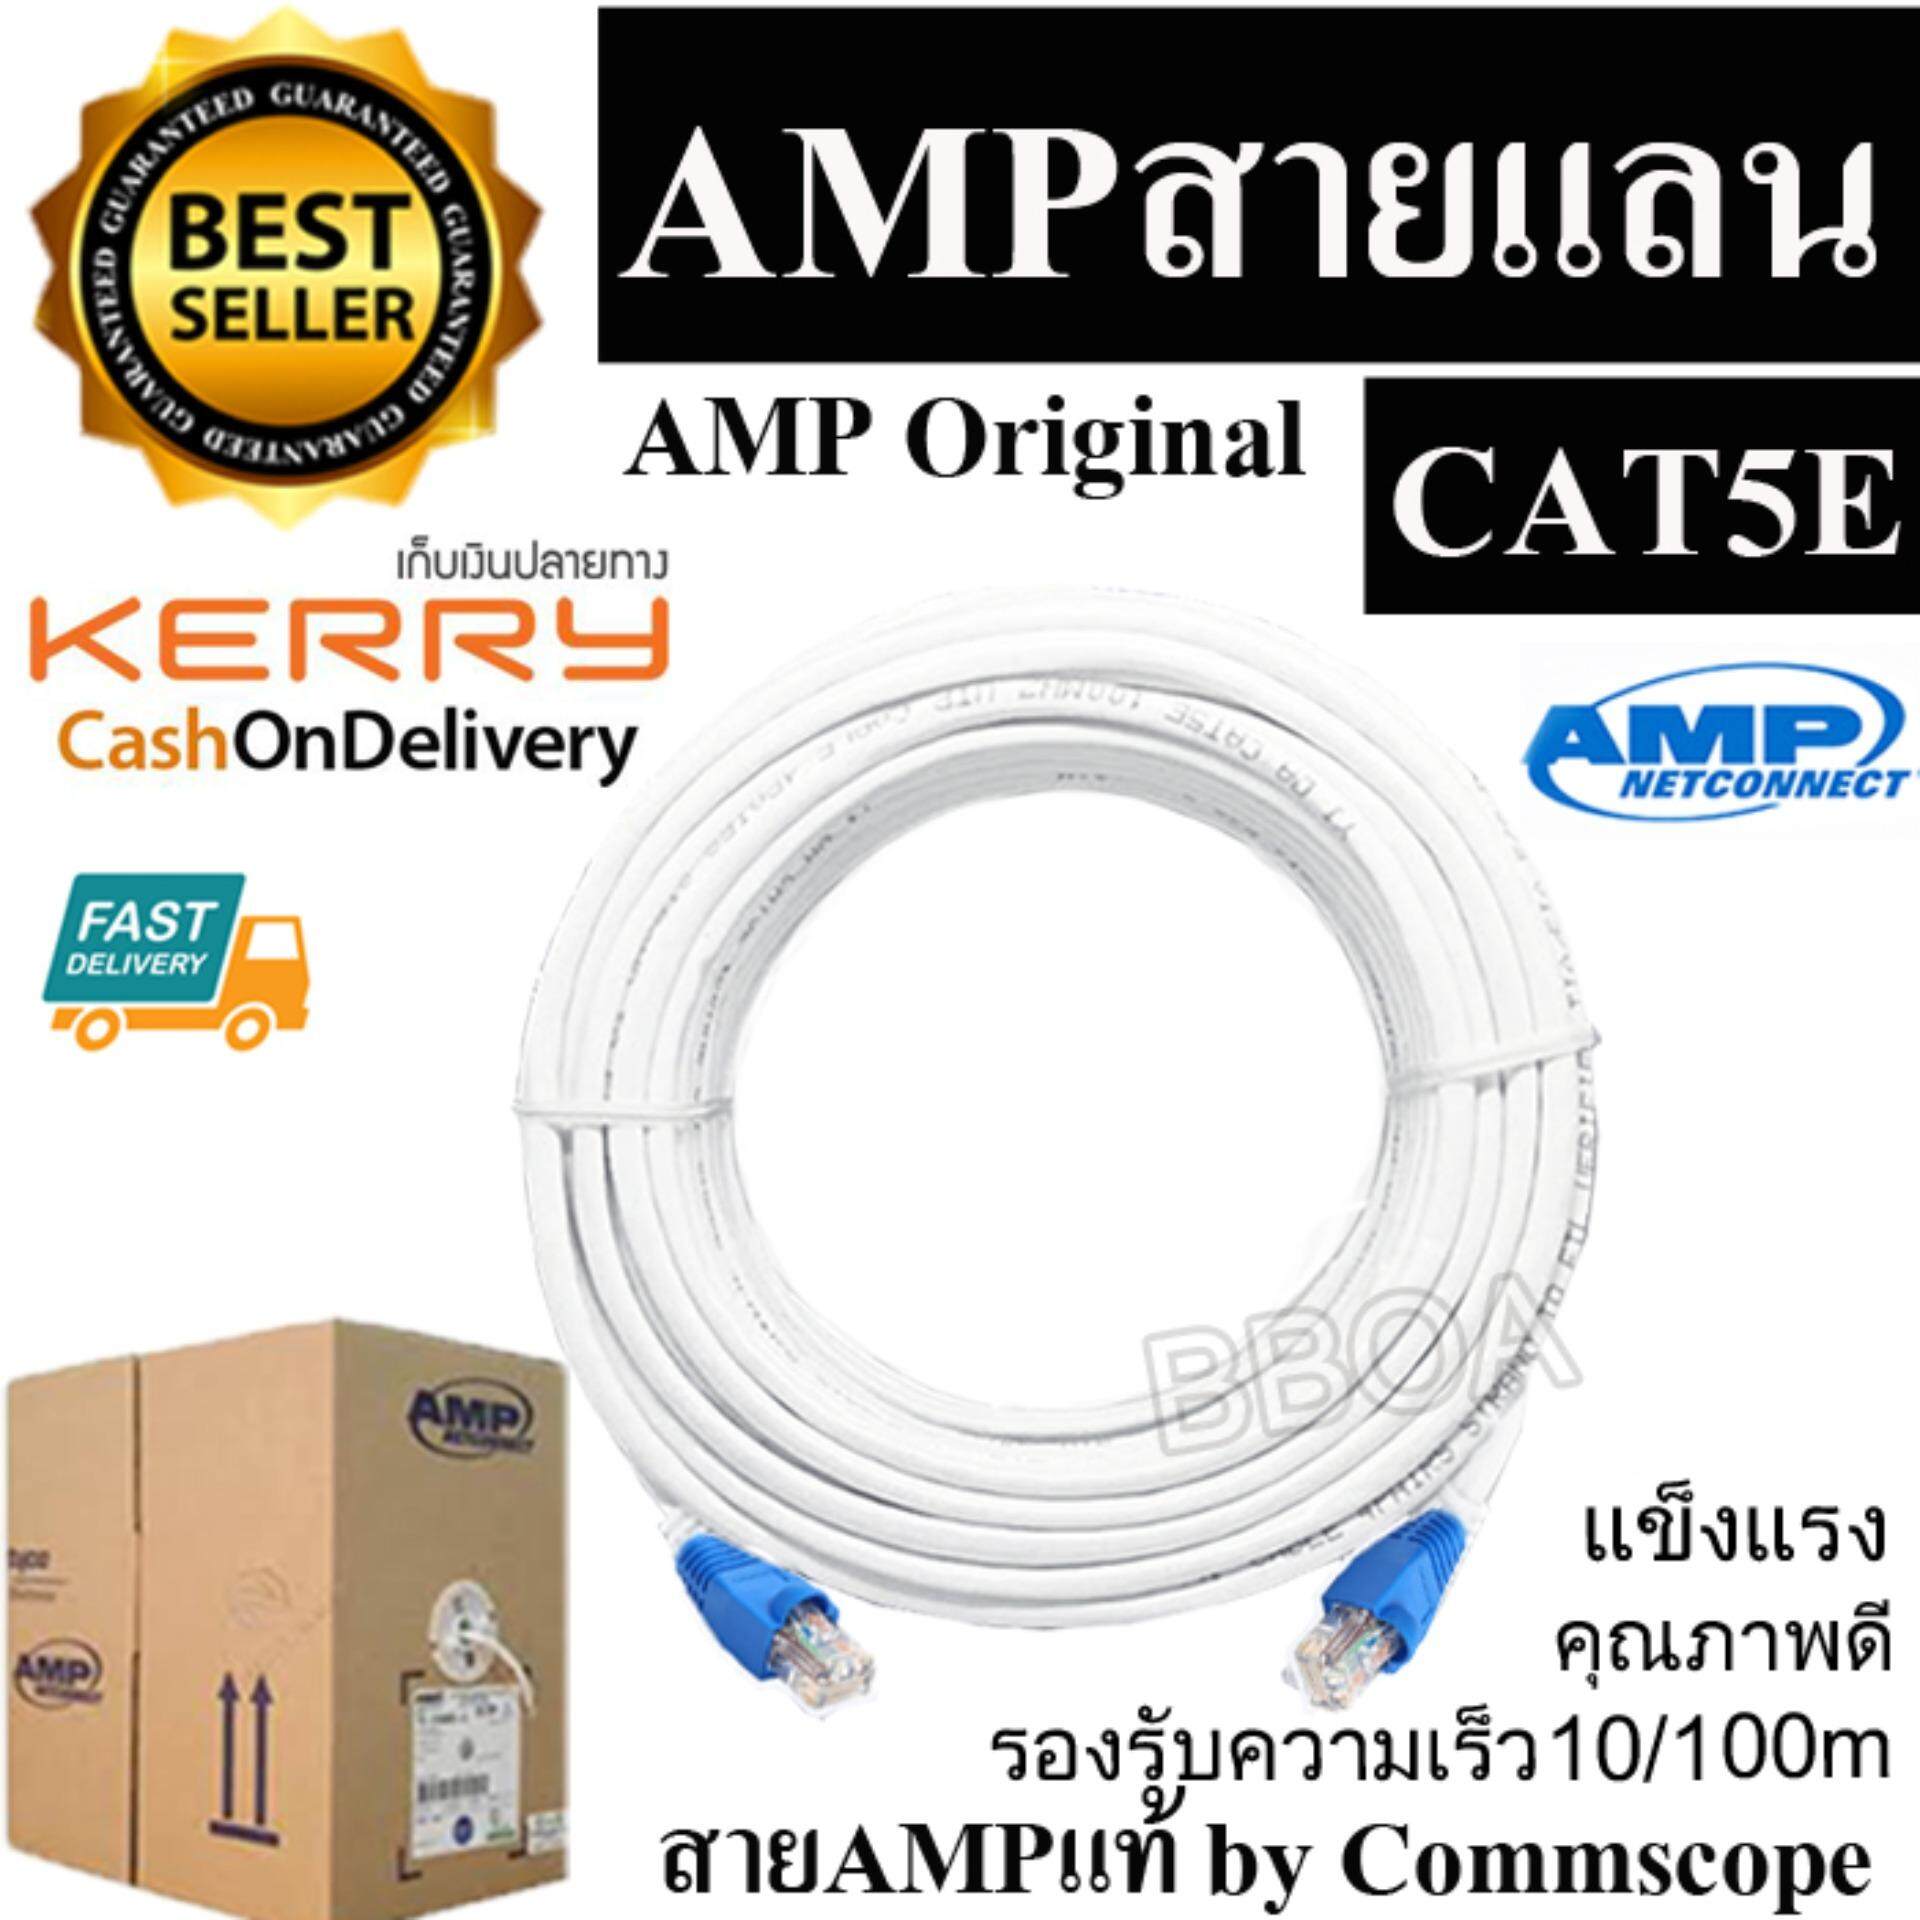 Amp Cable Lan สายแลน Cat5E 30M เข้าหัวพร้อมใช้งาน สายยาว30เมตร(ขาว) |  Lazada.Co.Th